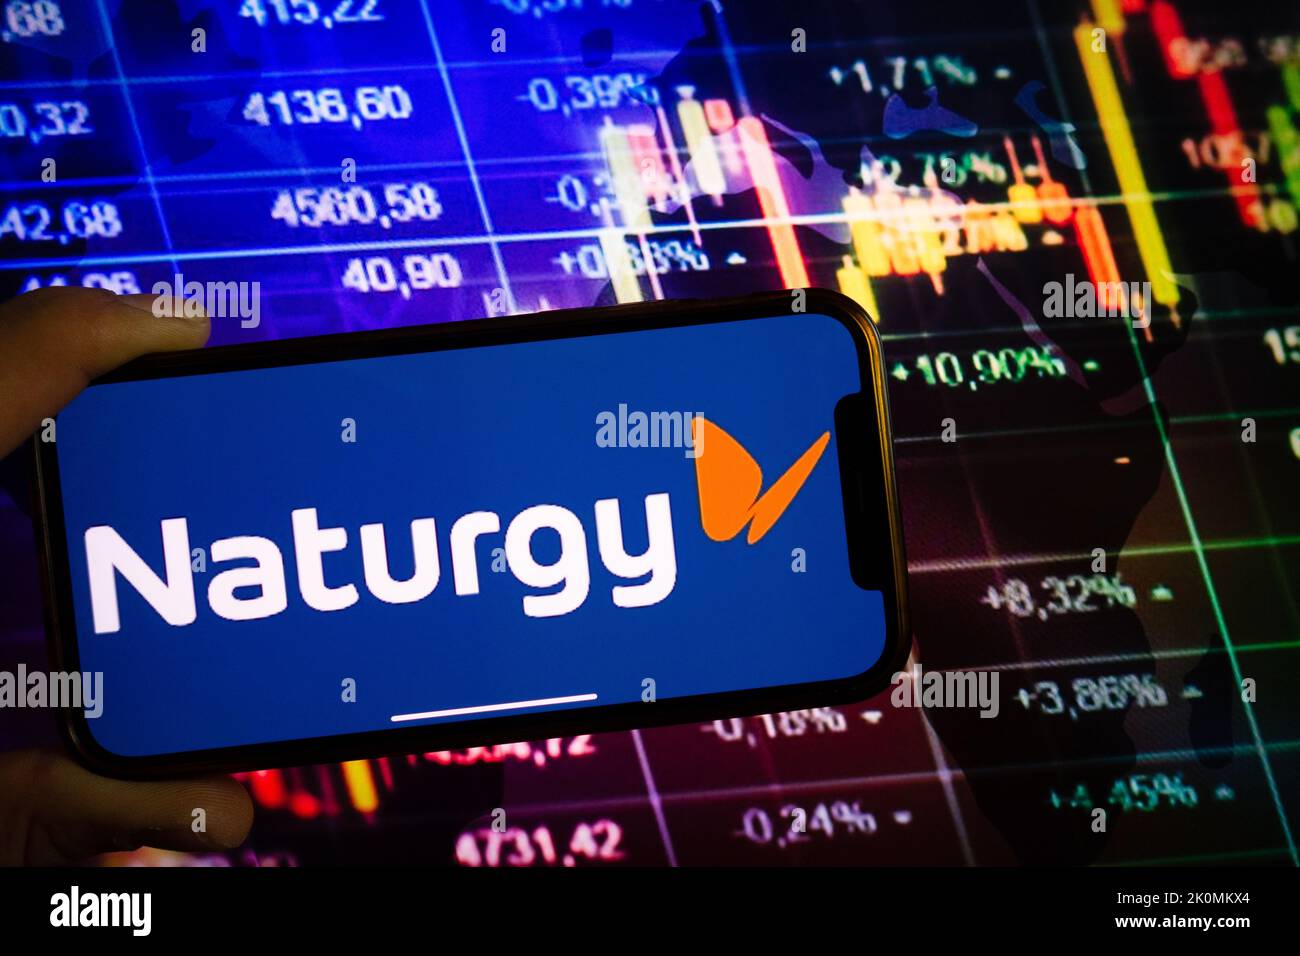 KONSKIE, POLAND - September 10, 2022: Smartphone displaying logo of Naturgy company on stock exchange diagram background Stock Photo